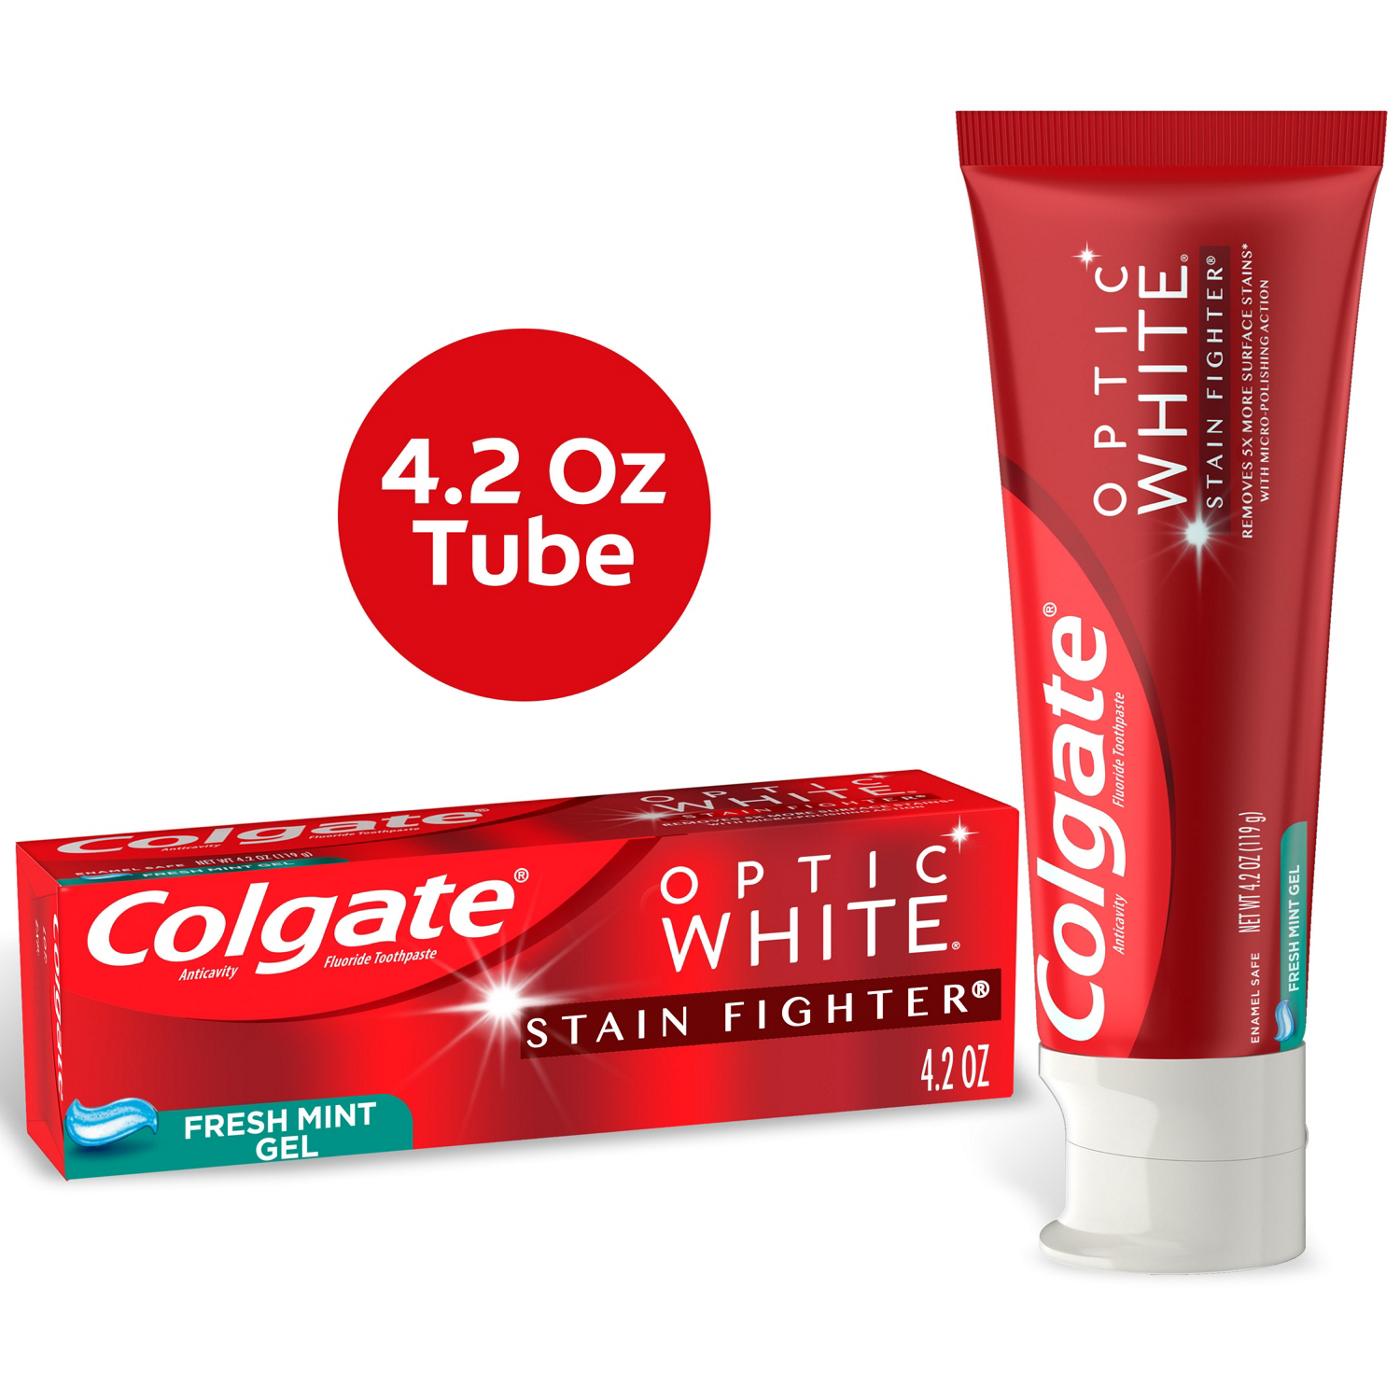 Colgate Optic White Anticavity Toothpaste - Fresh Mint Gel; image 5 of 10